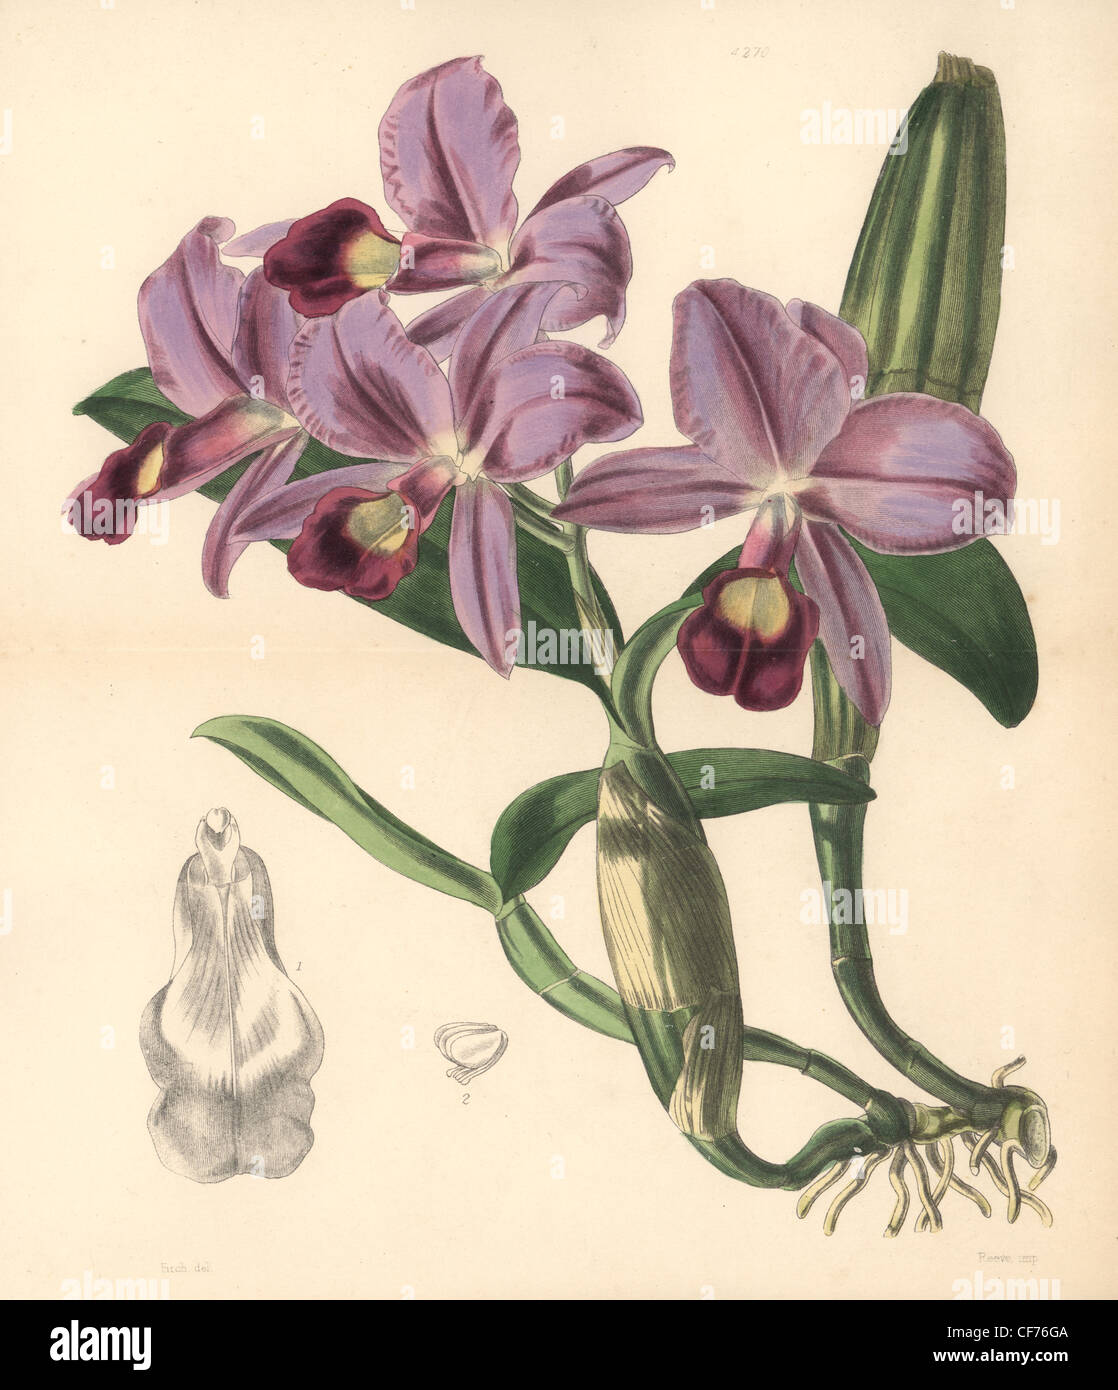 Mr. Skinner's cattleya orchid, Cattleya skinneri. Stock Photo